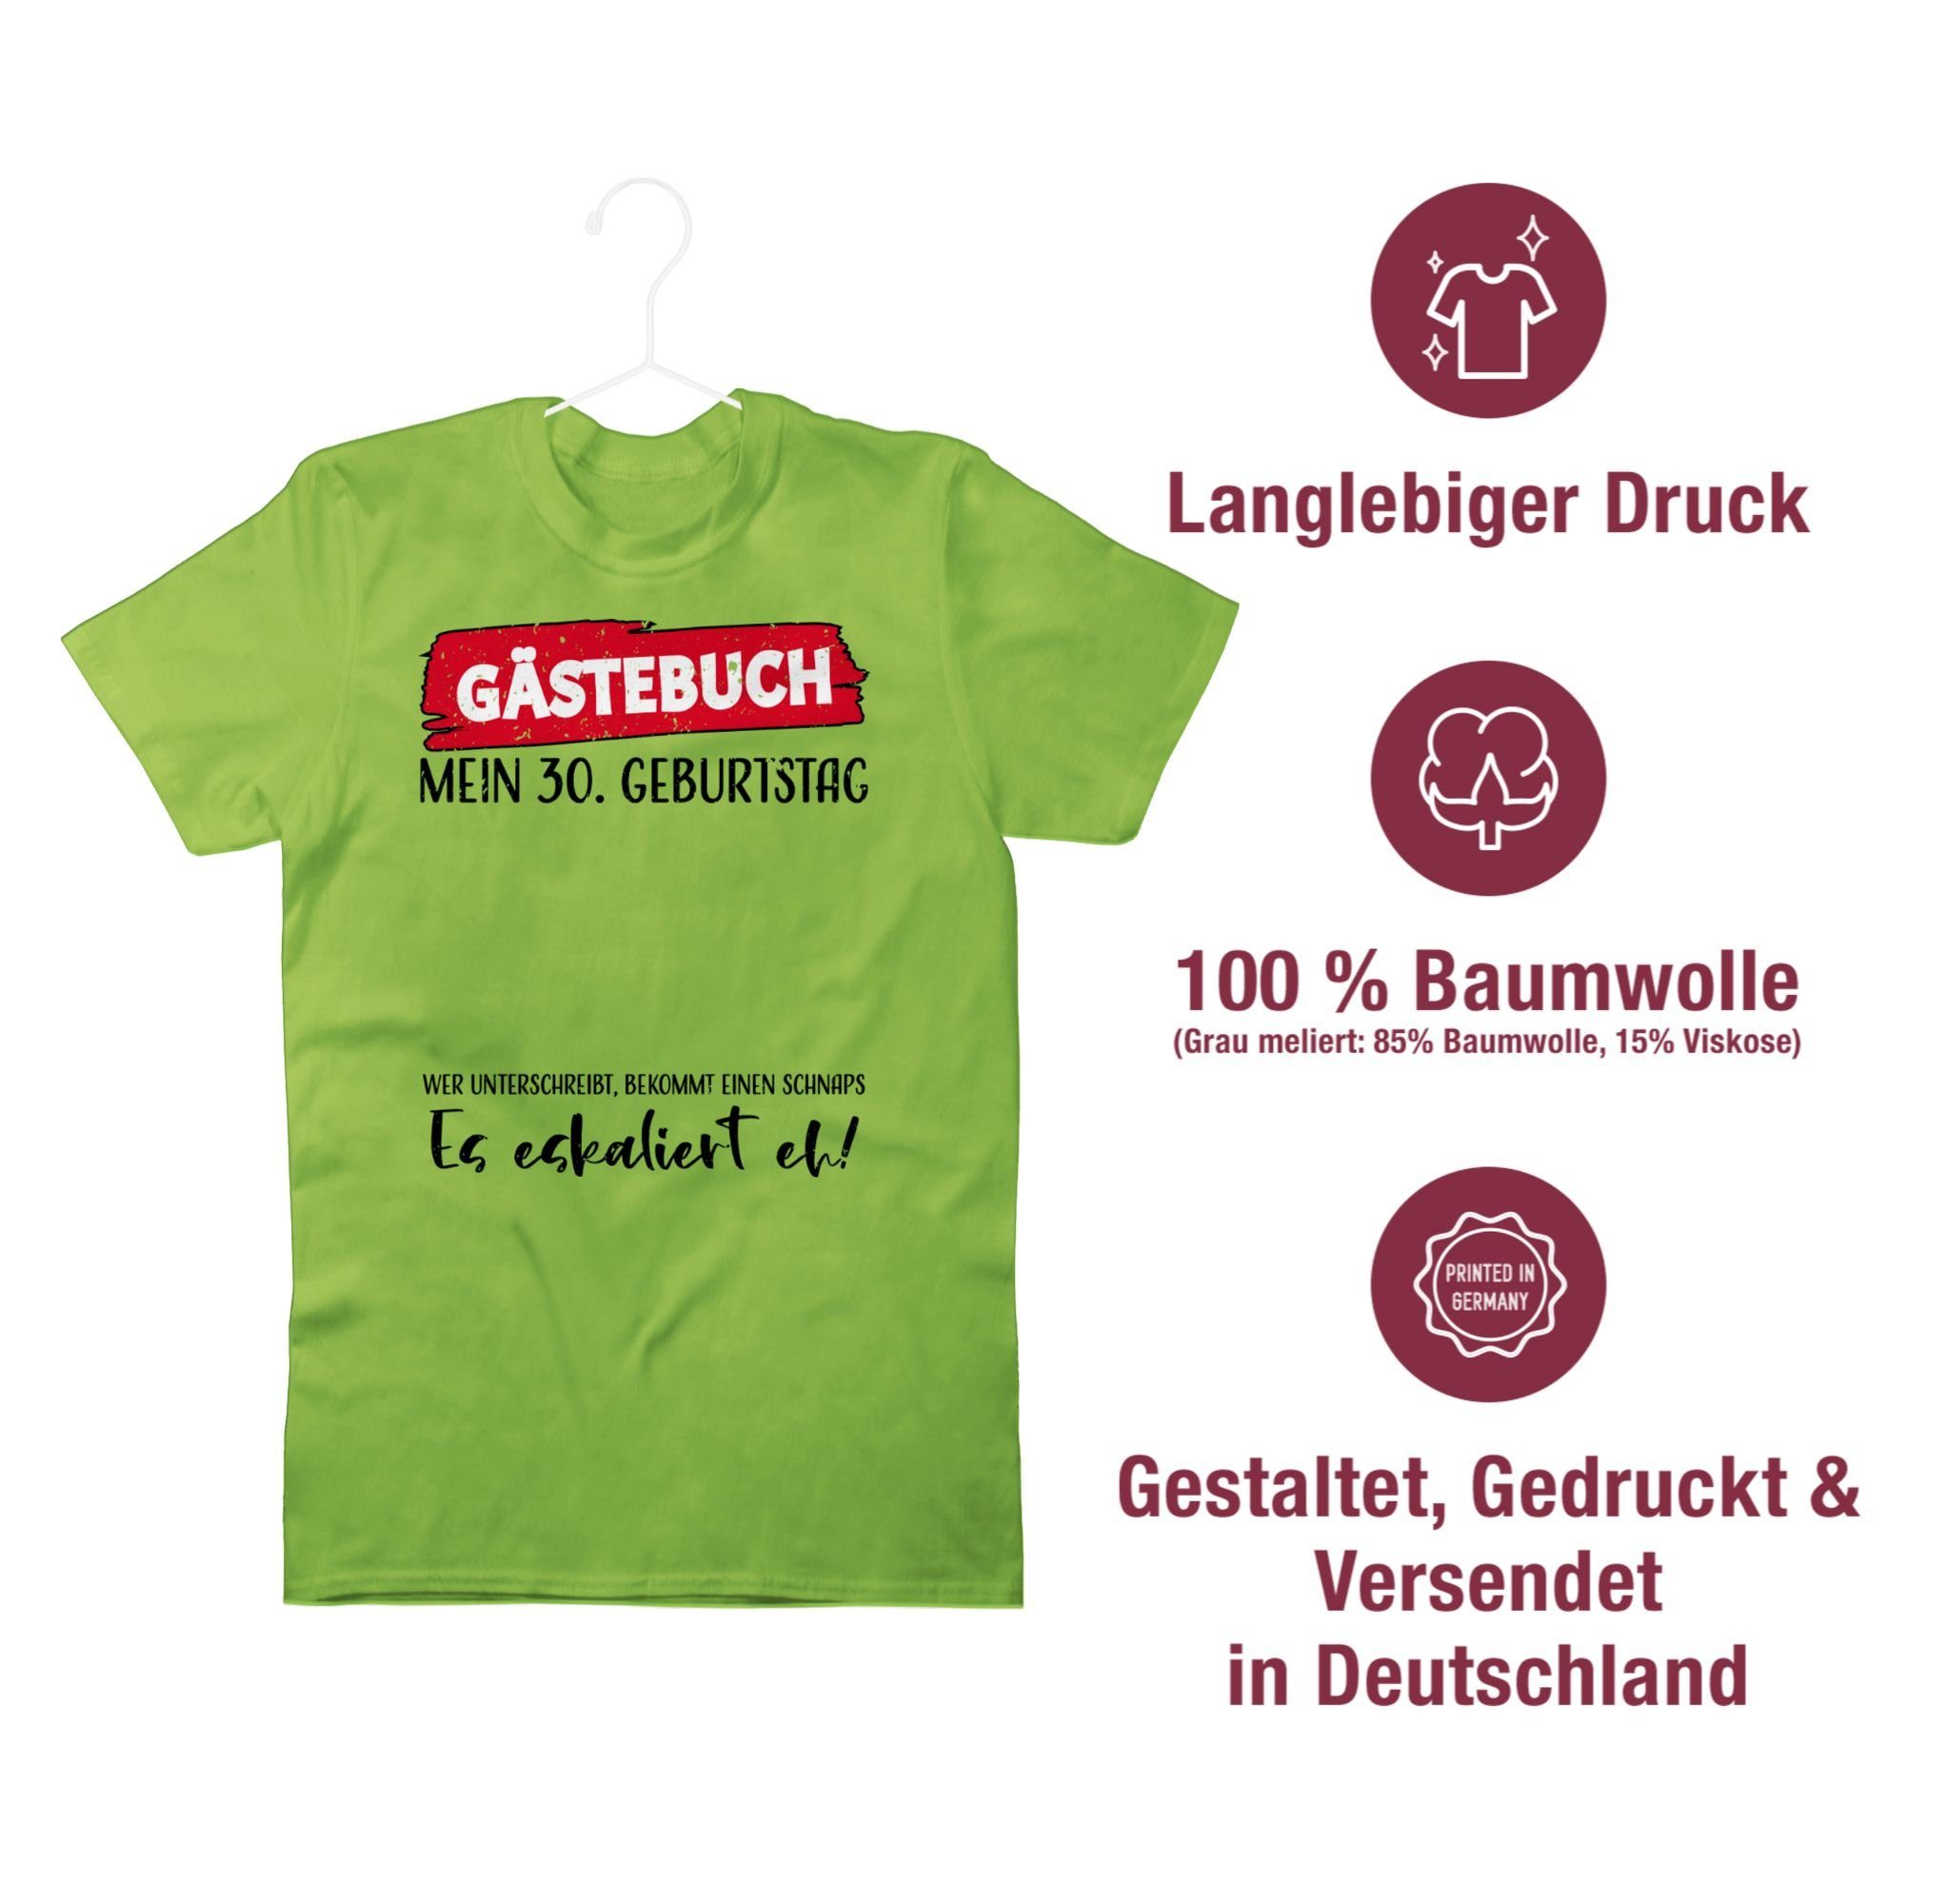 03 30. T-Shirt Geburtstag 30. Geburtstag Hellgrün Shirtracer Gästebuch